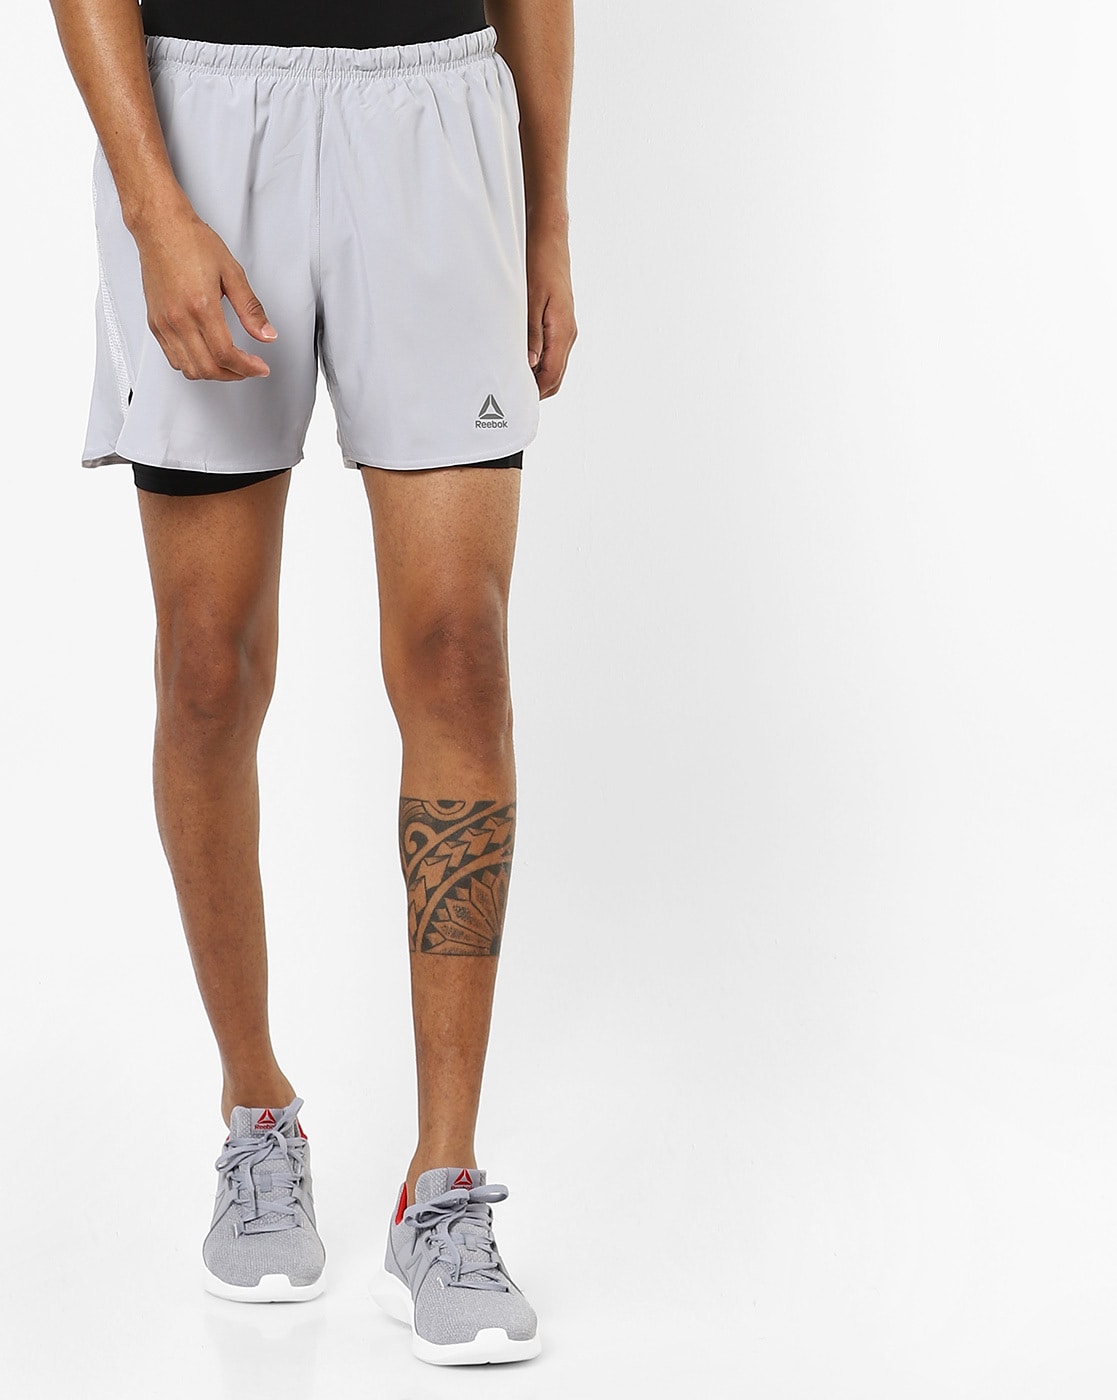 reebok shorts online purchase